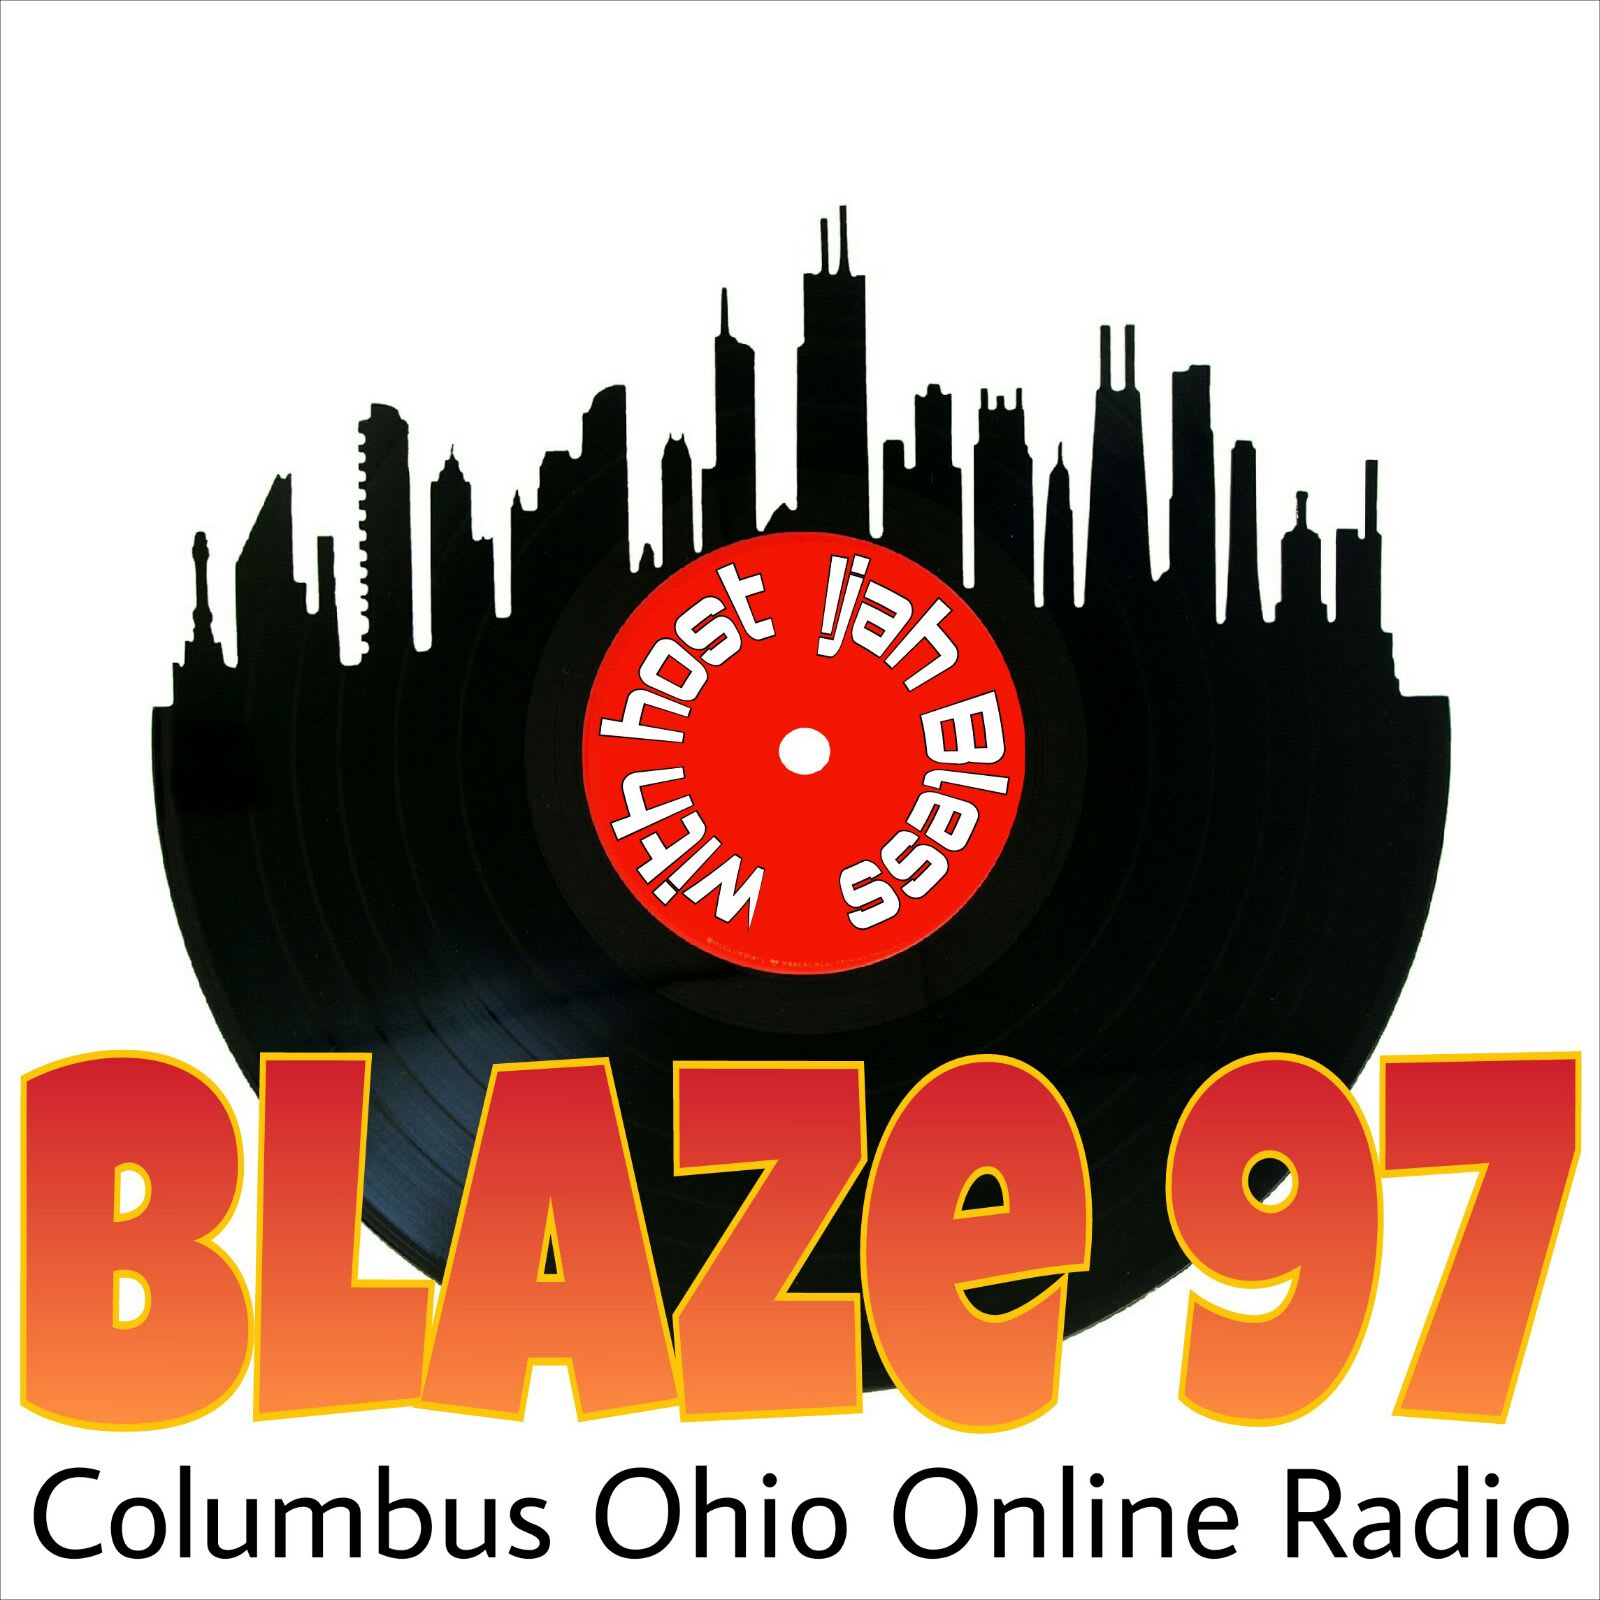 Blaze 97 Online Radio